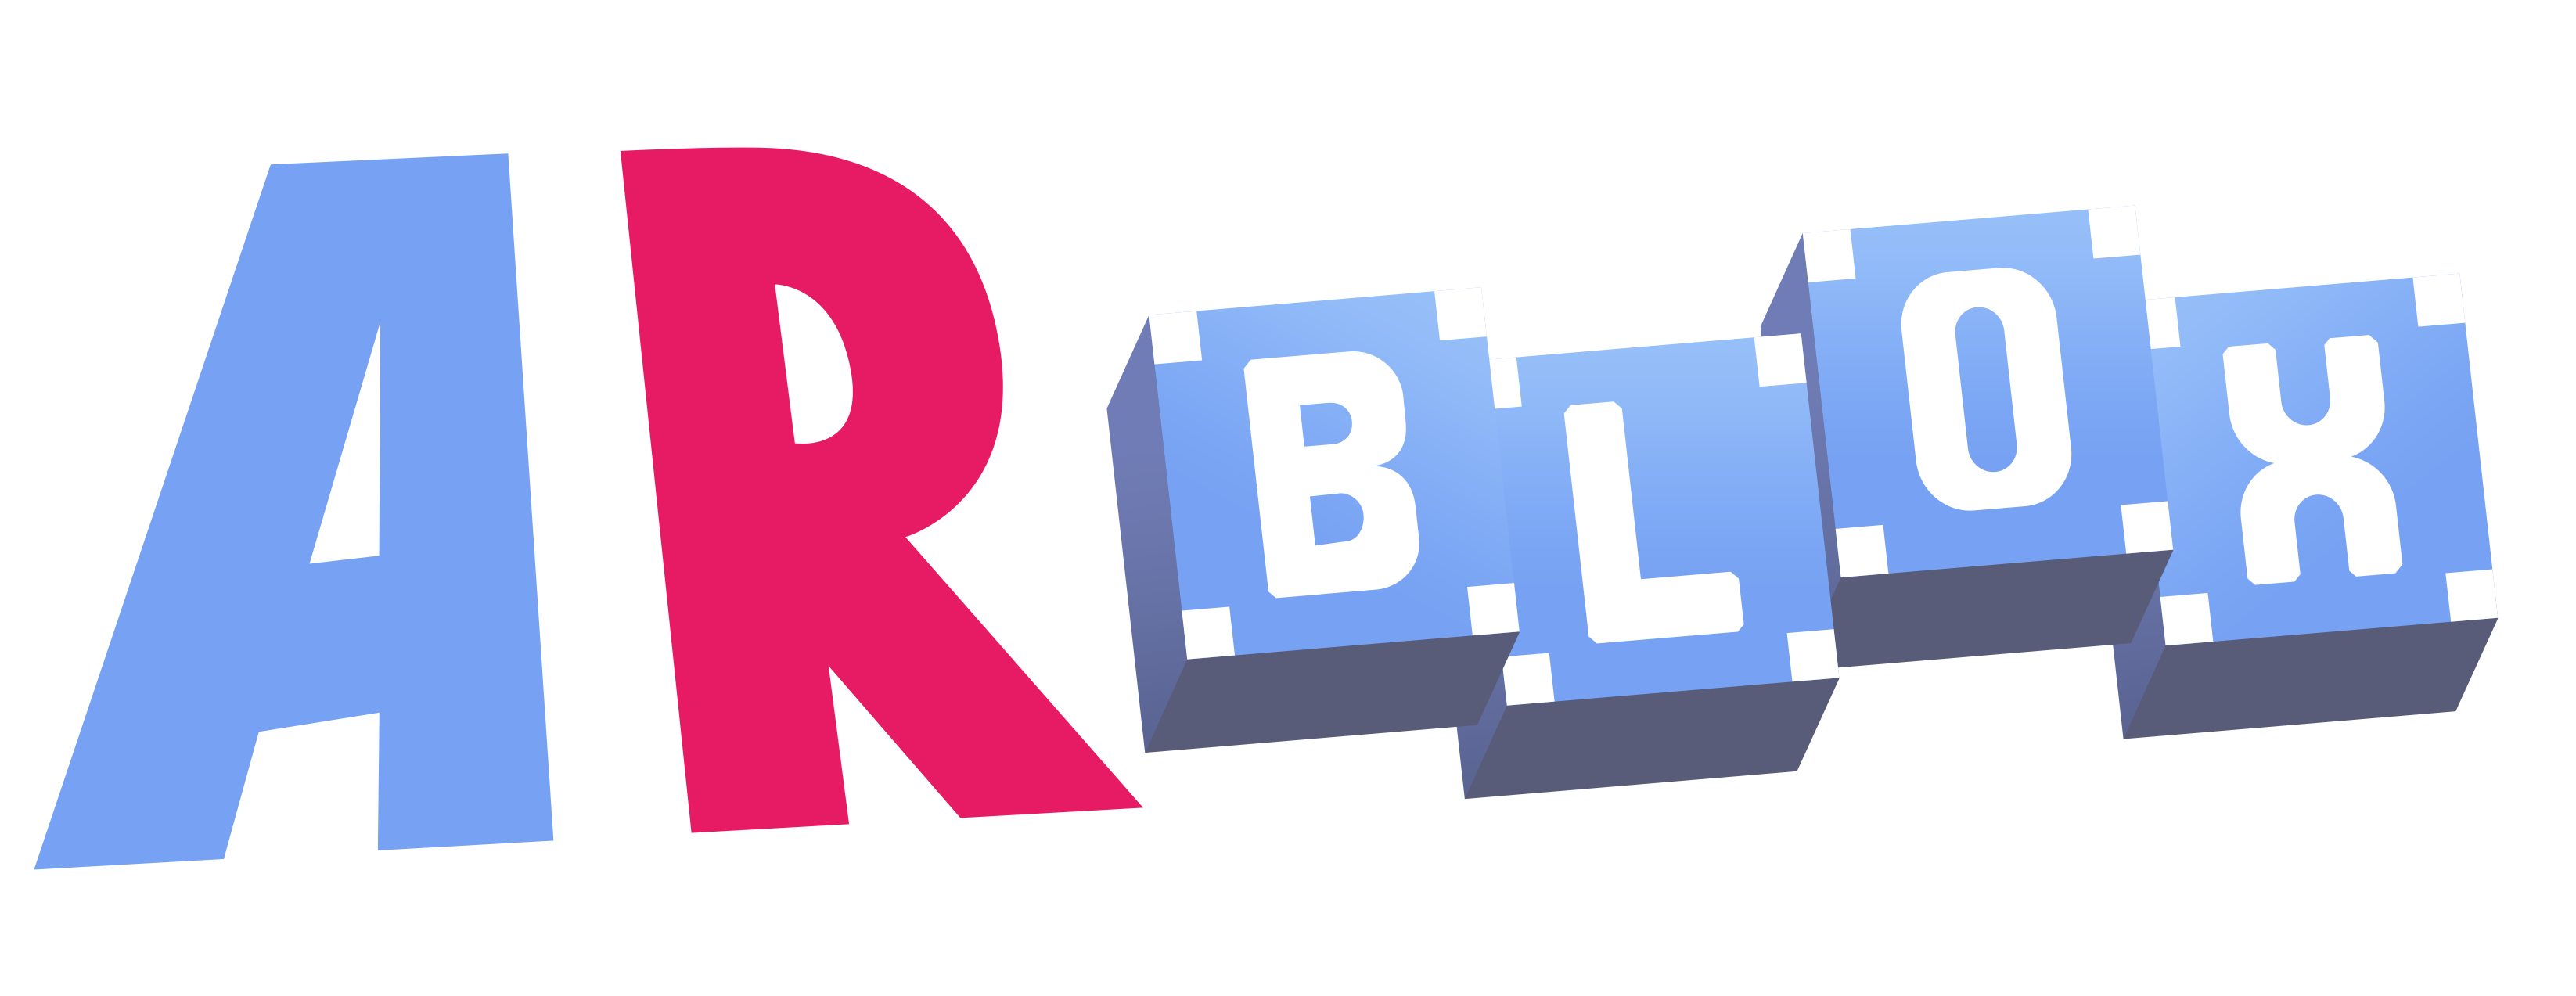 ARblox games augmented reality startup company logo